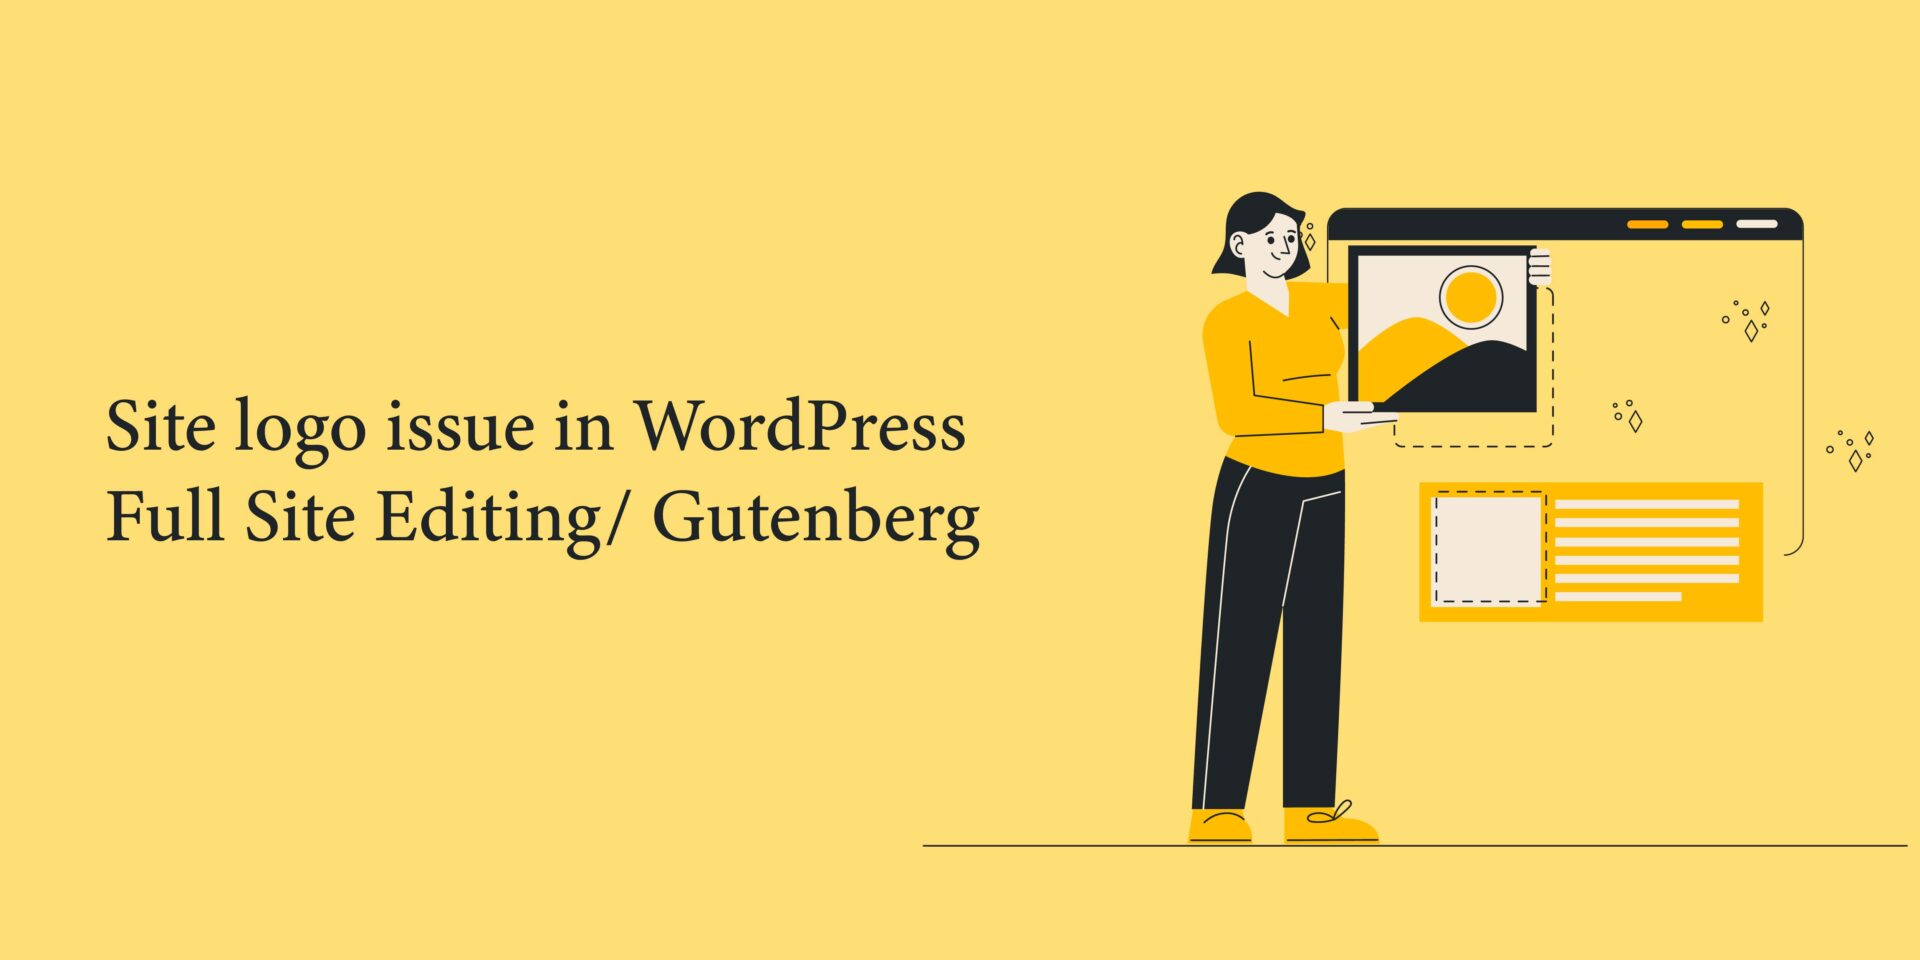 Site logo issue in WordPress Full Site Editing Gutenberg